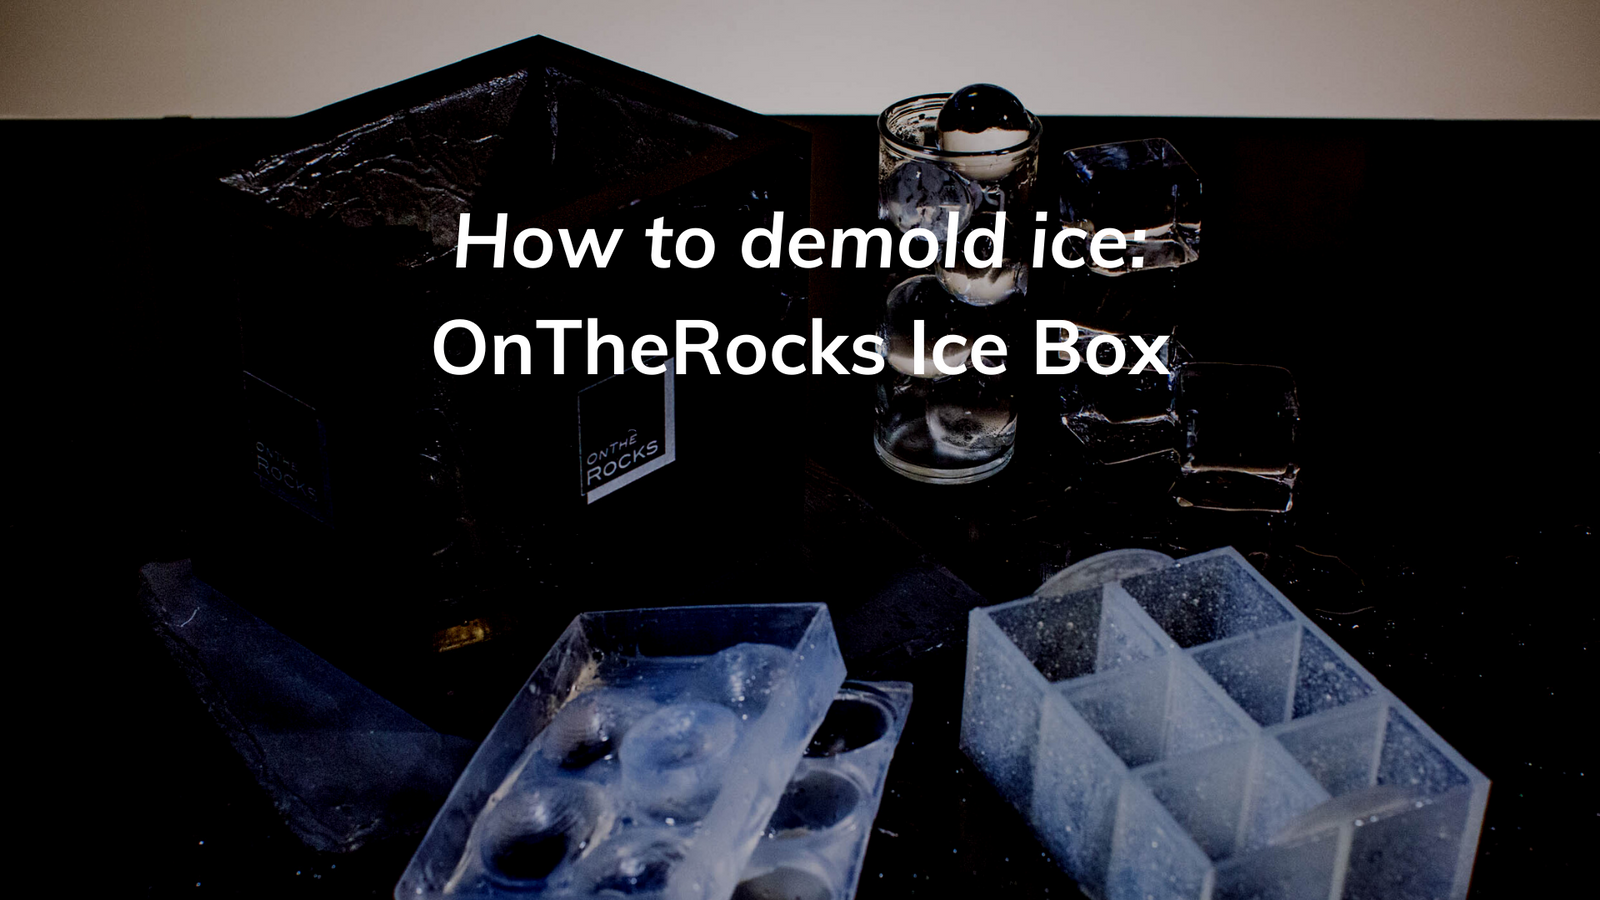 OnTheRocks Ice Box - How It Works